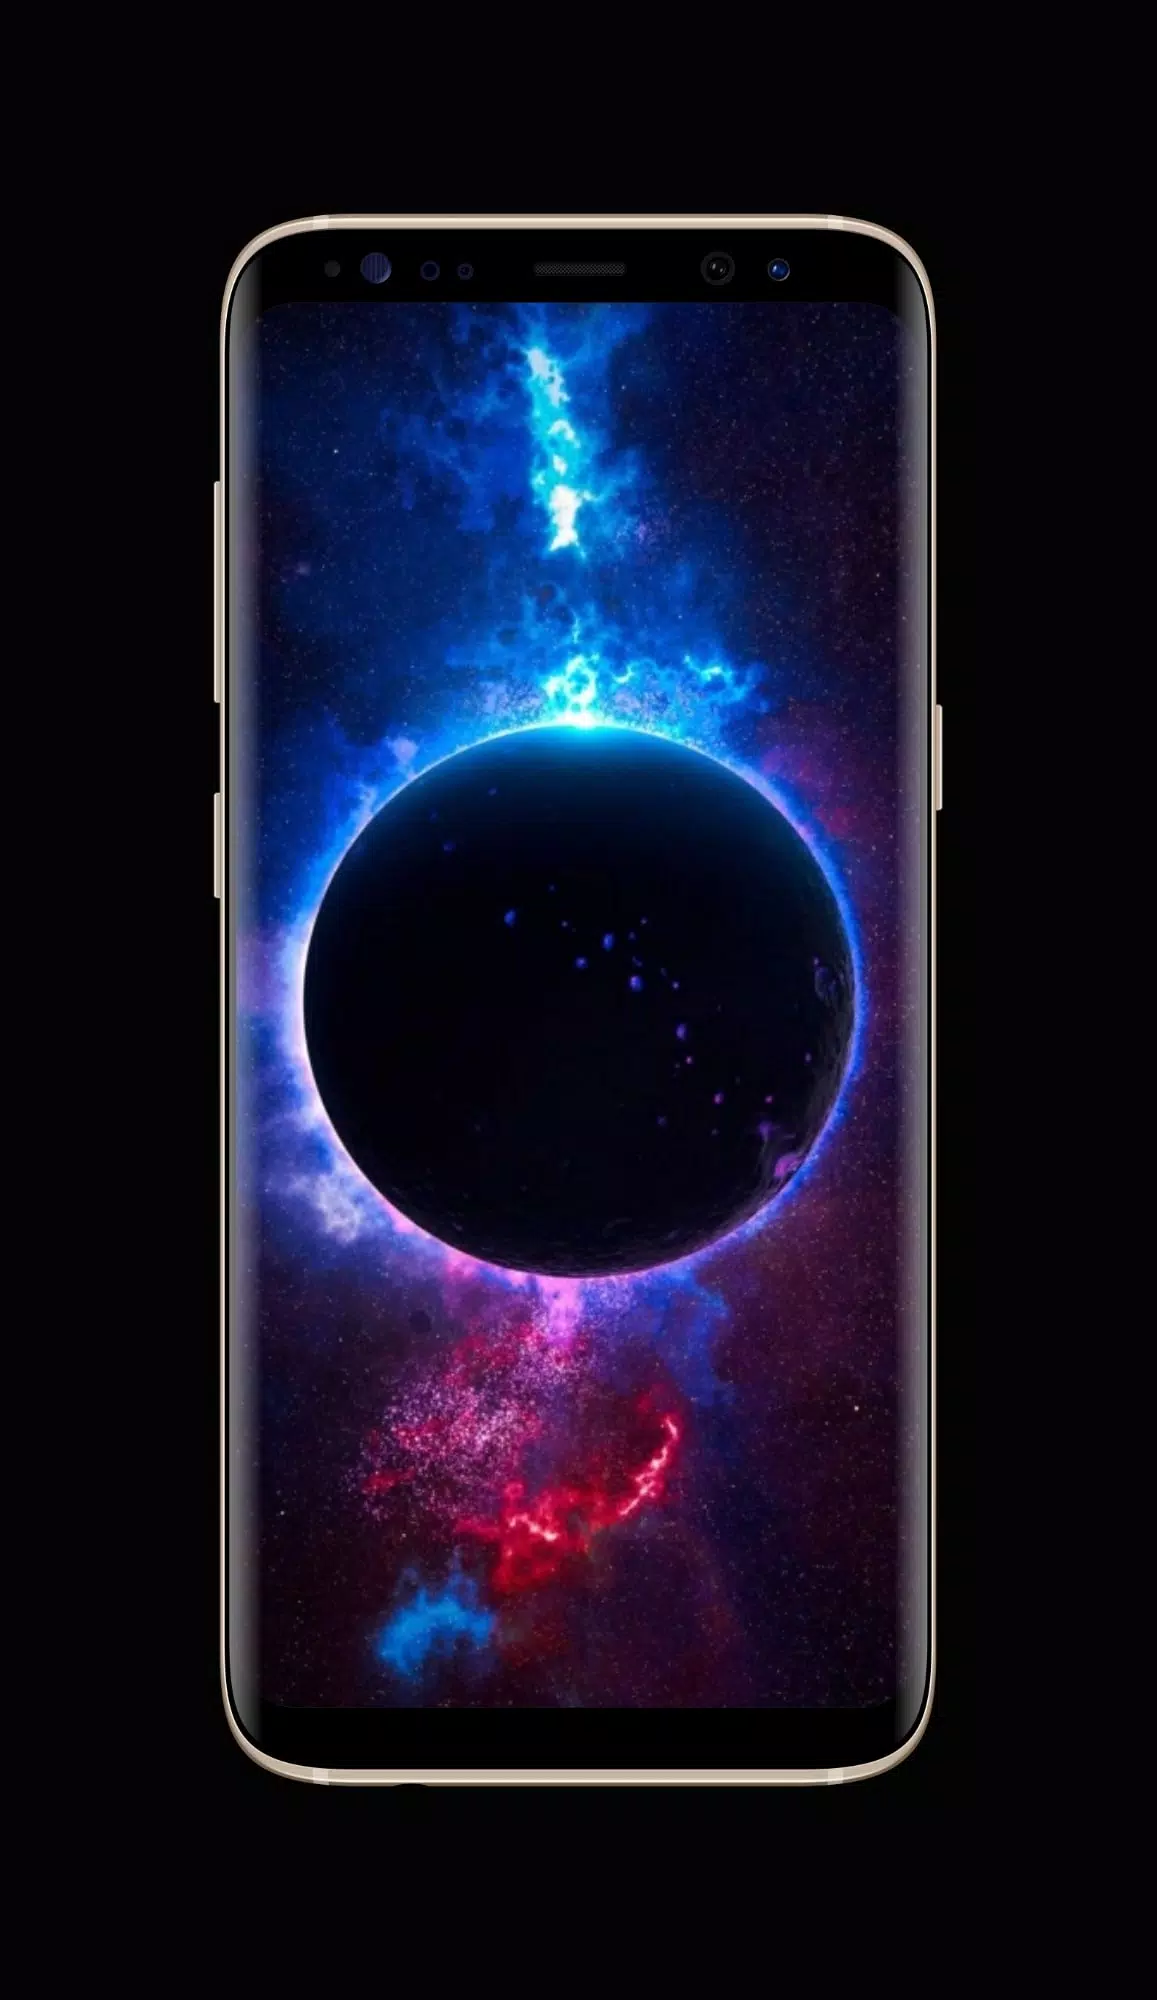 Black Hole 4K Live Wallpaper